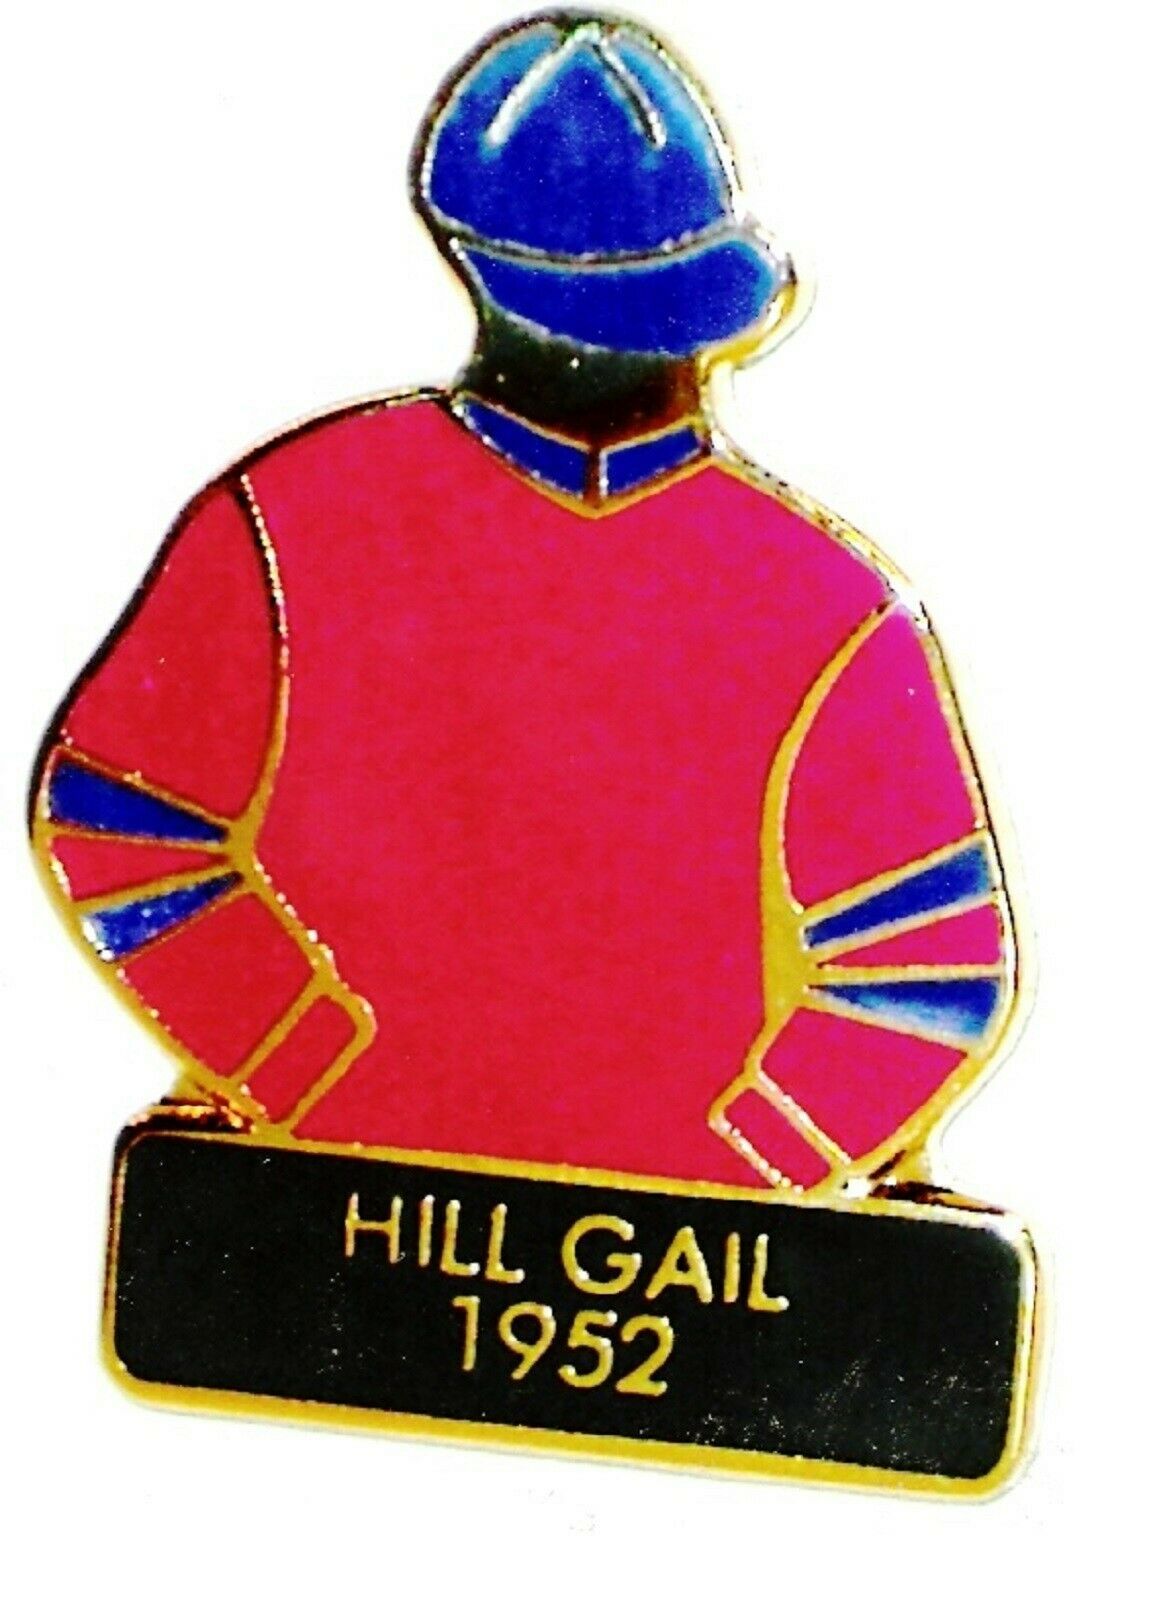 1952 HILL GAIL Kentucky Derby Jockey Silks Pin Horse Racing